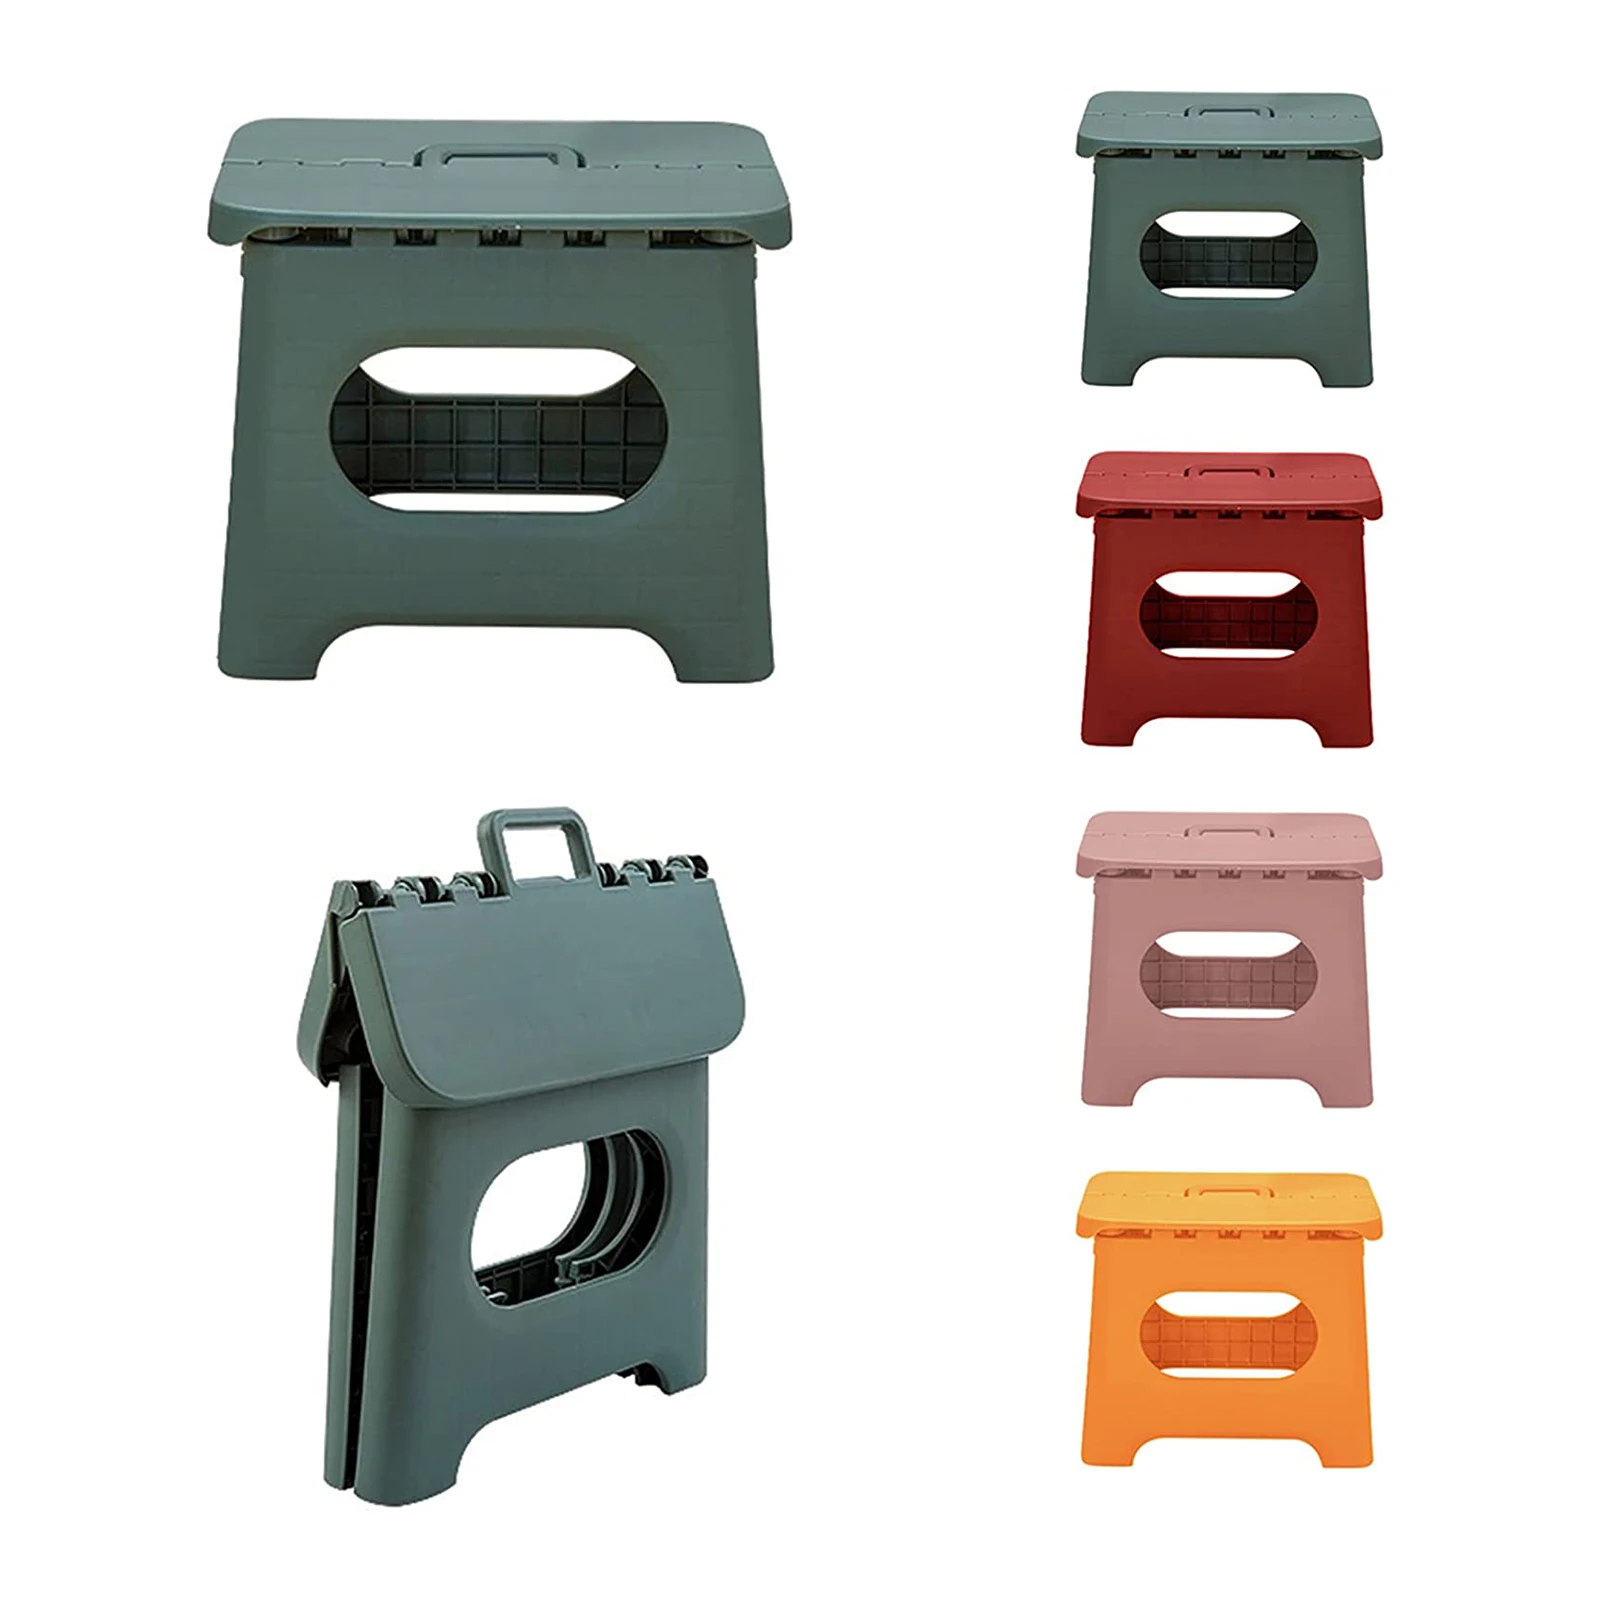 

Train Mazar Folding Stool Portable Plastic Kindergarten Chair Outdoor Adult Home Gift Small Bench #55